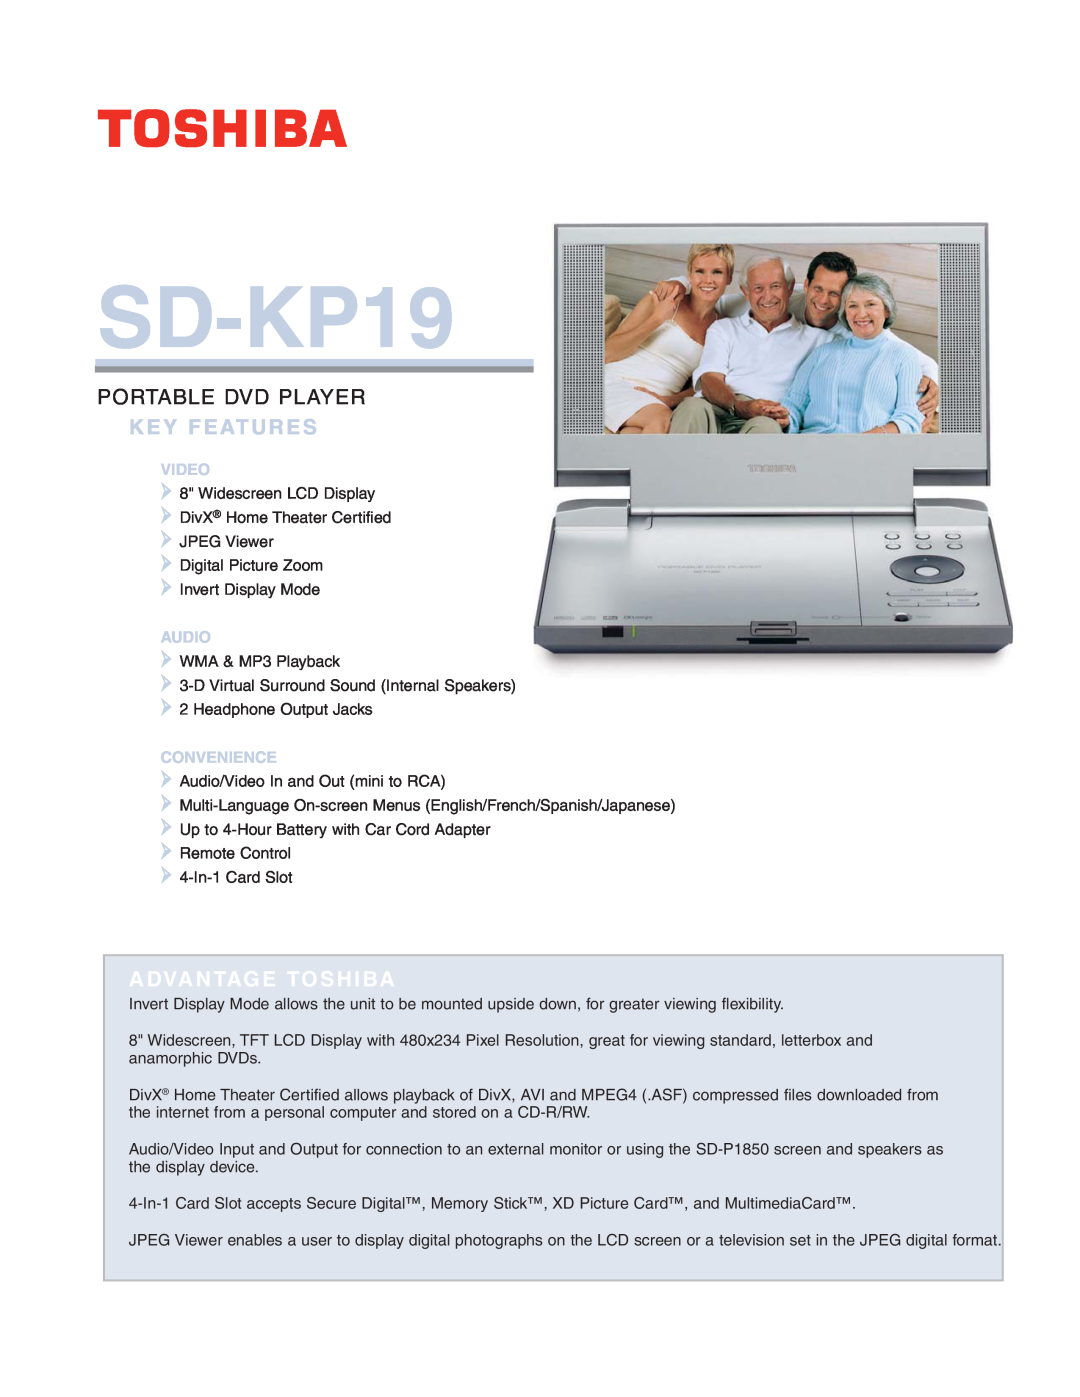 Toshiba SD-KP19 manual Key Features, Portable Dvd Player, Advantage Toshiba, Video, Audio, Convenience 